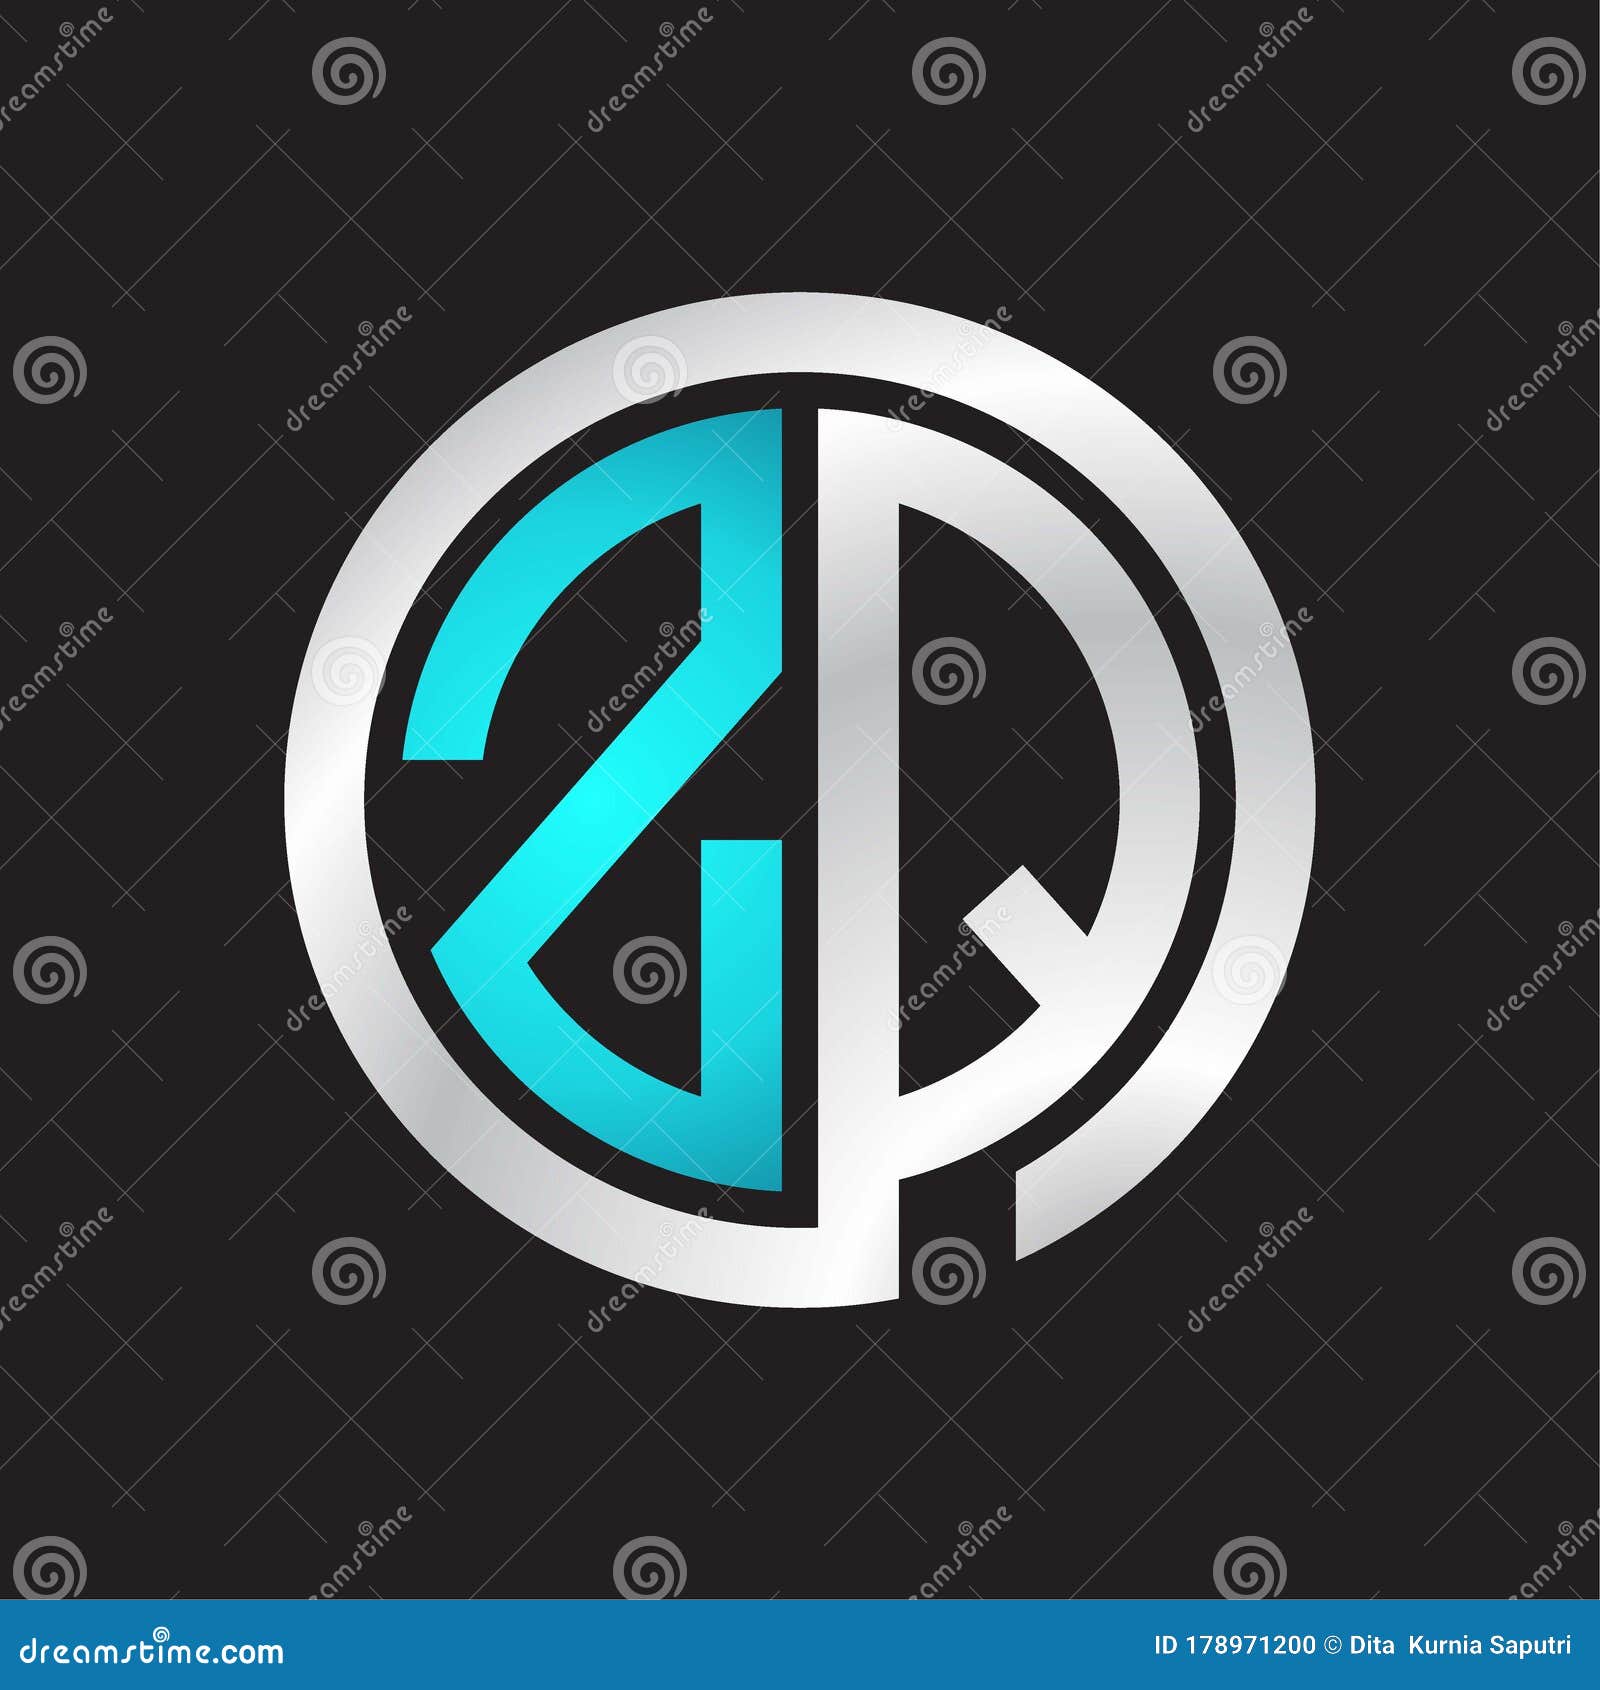 Zq Initial Logo Linked Circle Monogram Stock Vector Illustration Of